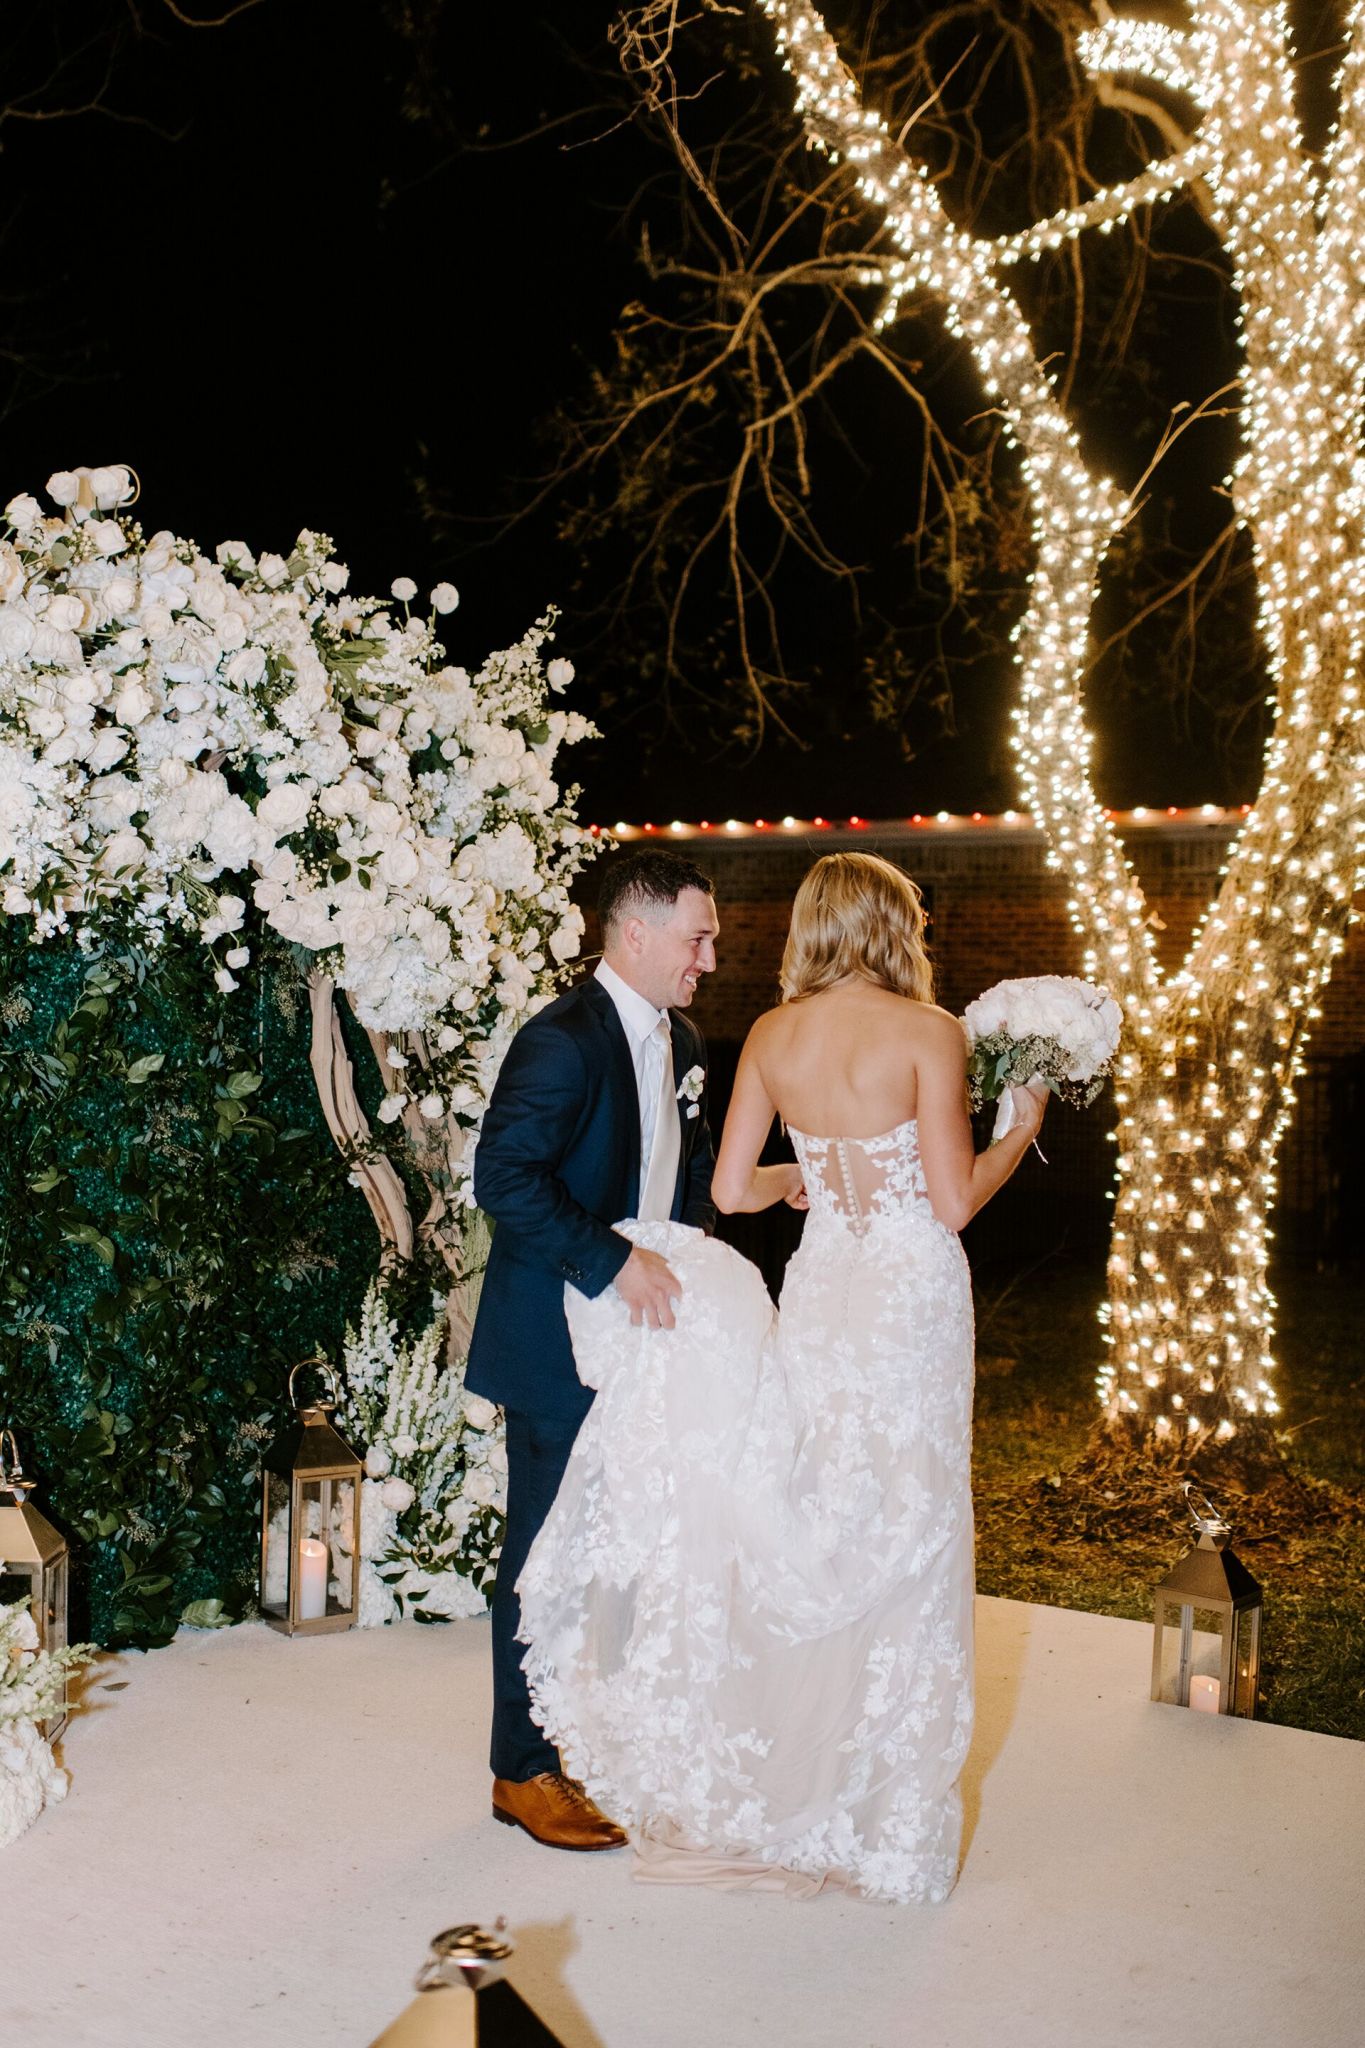 Alex Bregman surprised a couple by crashing their wedding